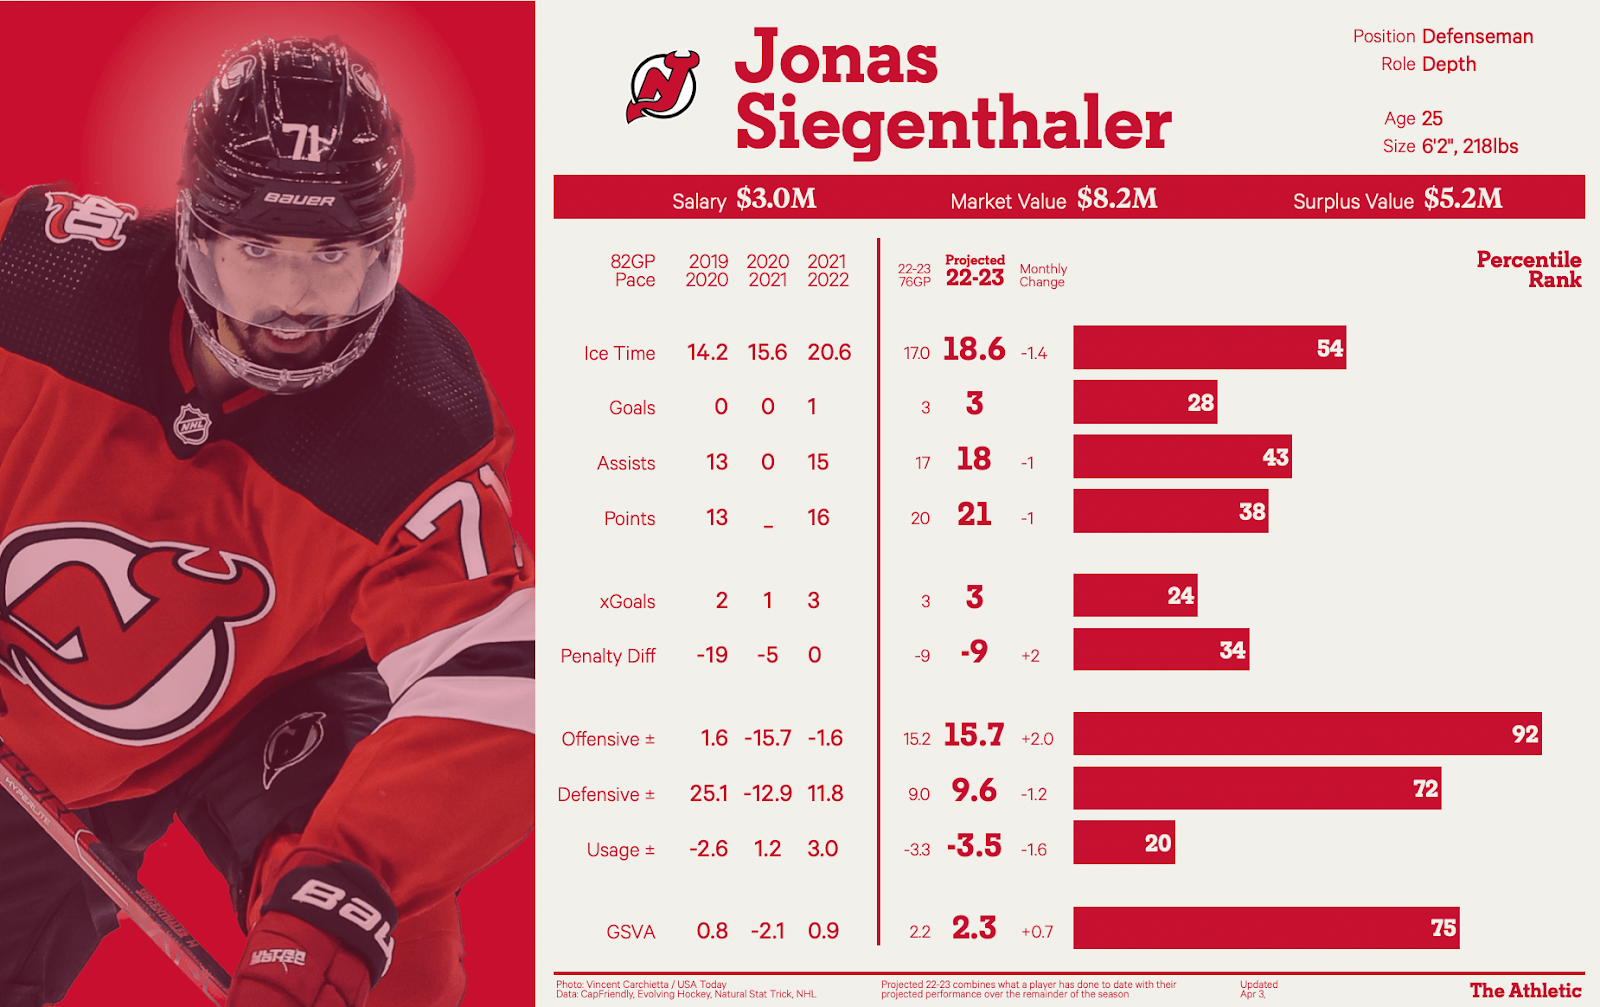 Devils acquire defenseman Jonas Siegenthaler in trade with Capitals